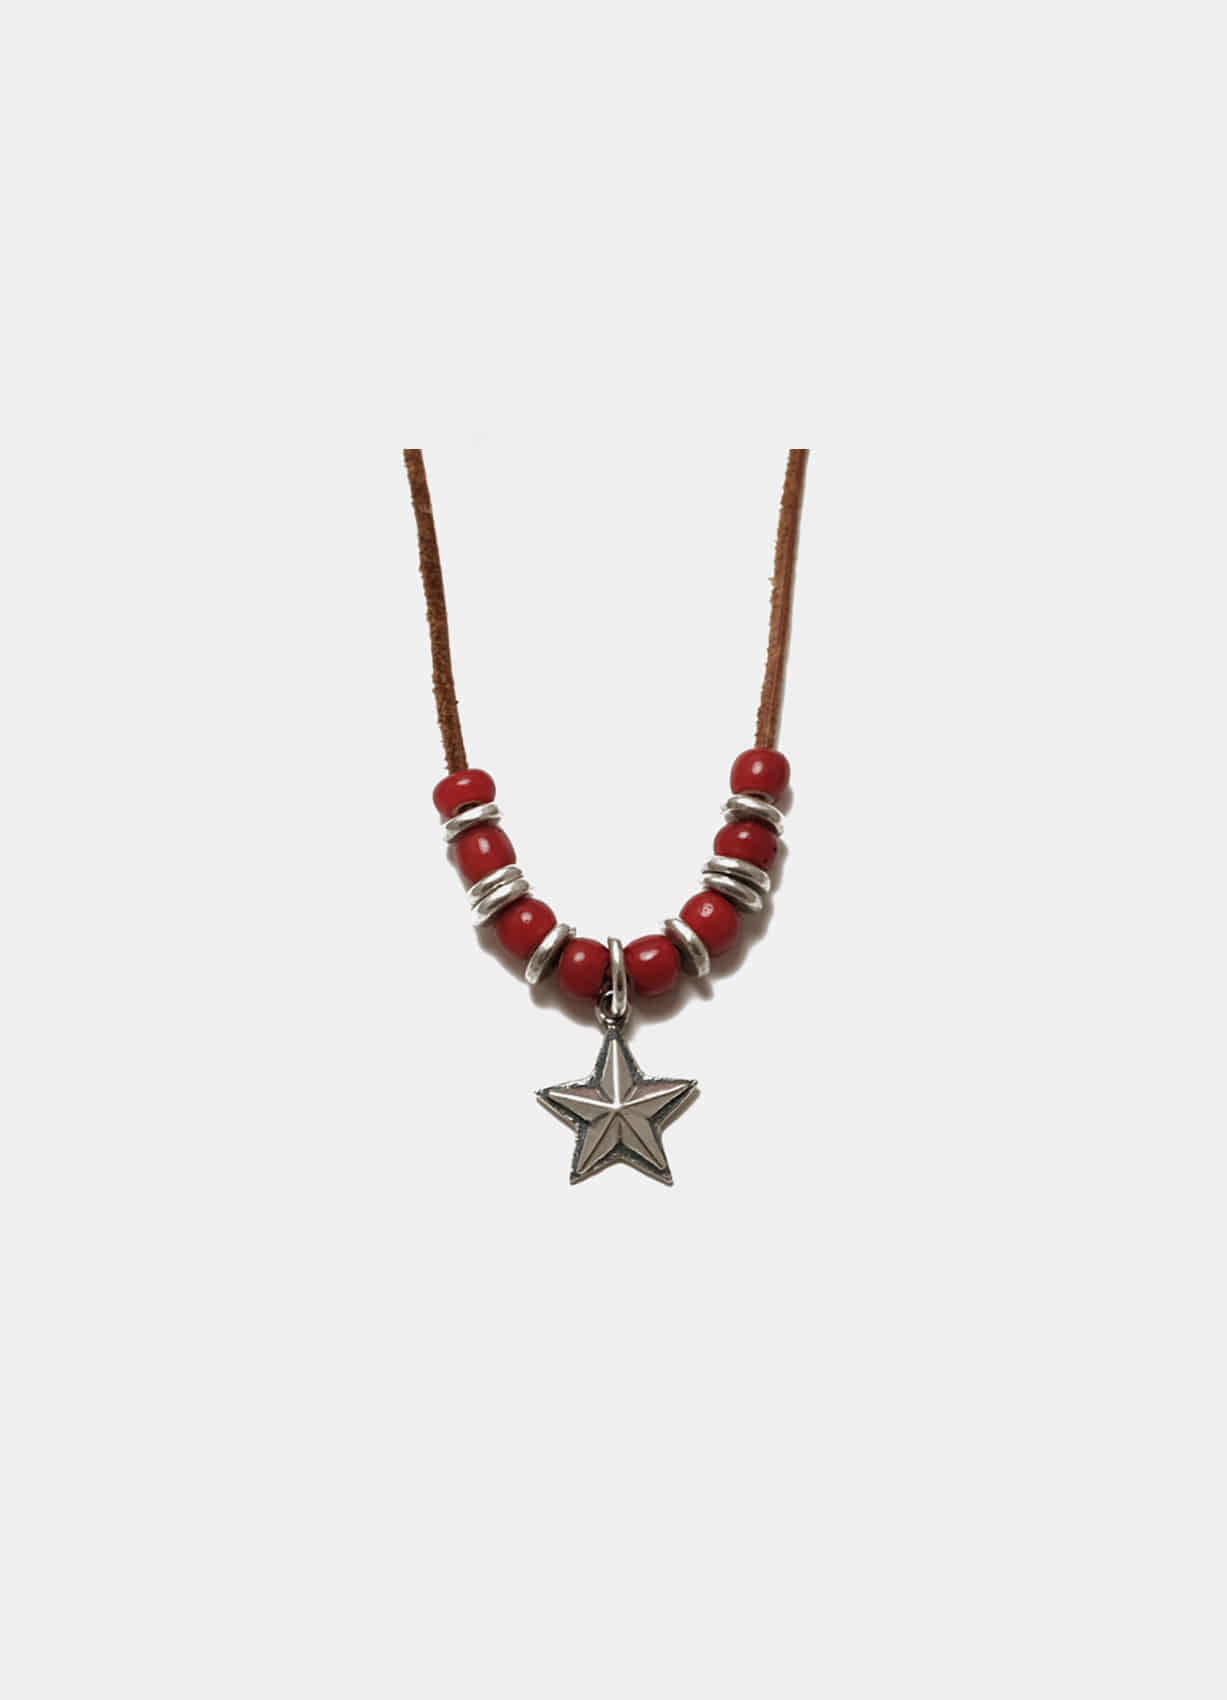 [fluid] star pendant beads necklace